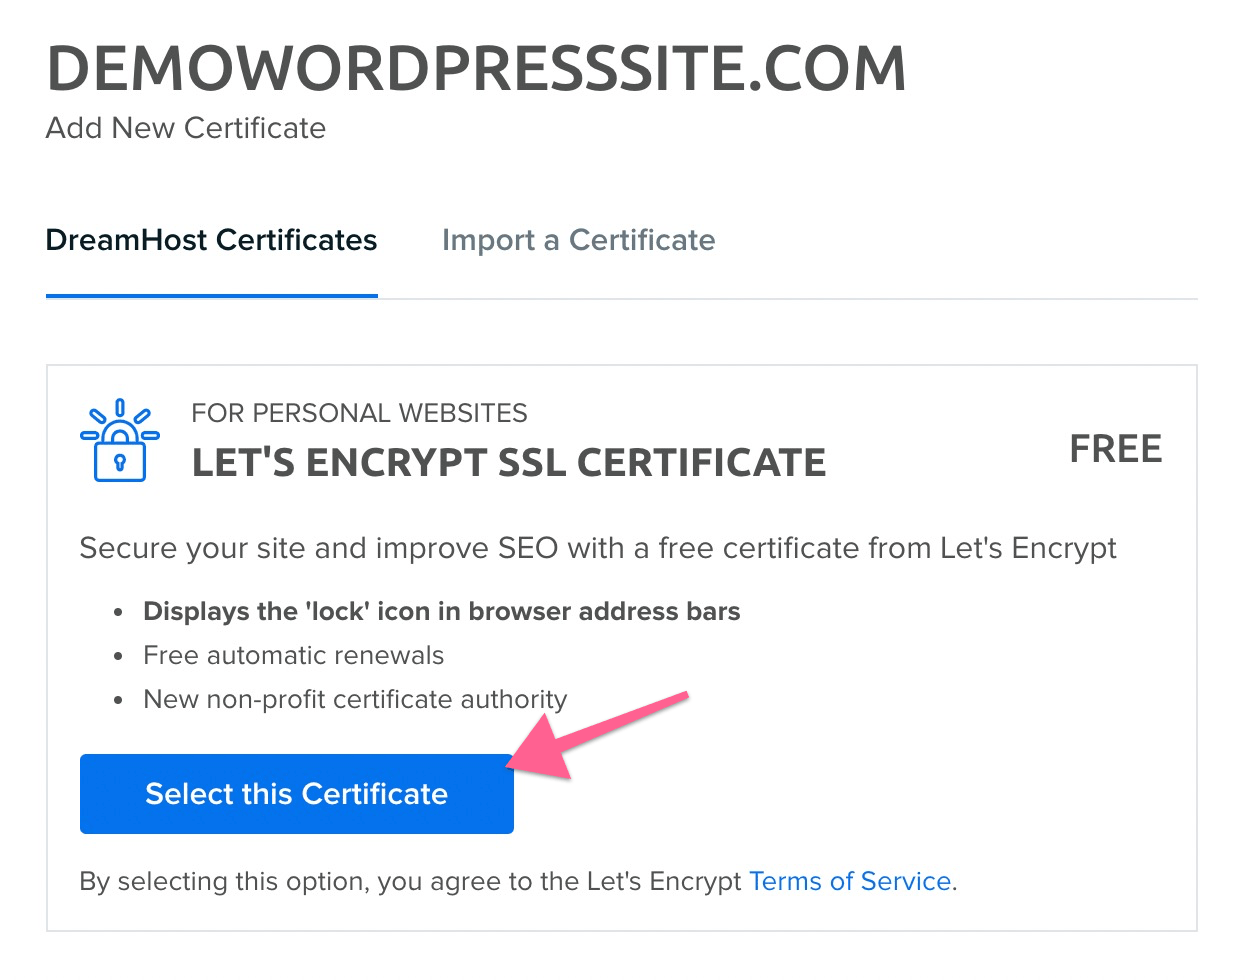 Install the SSL Certificate